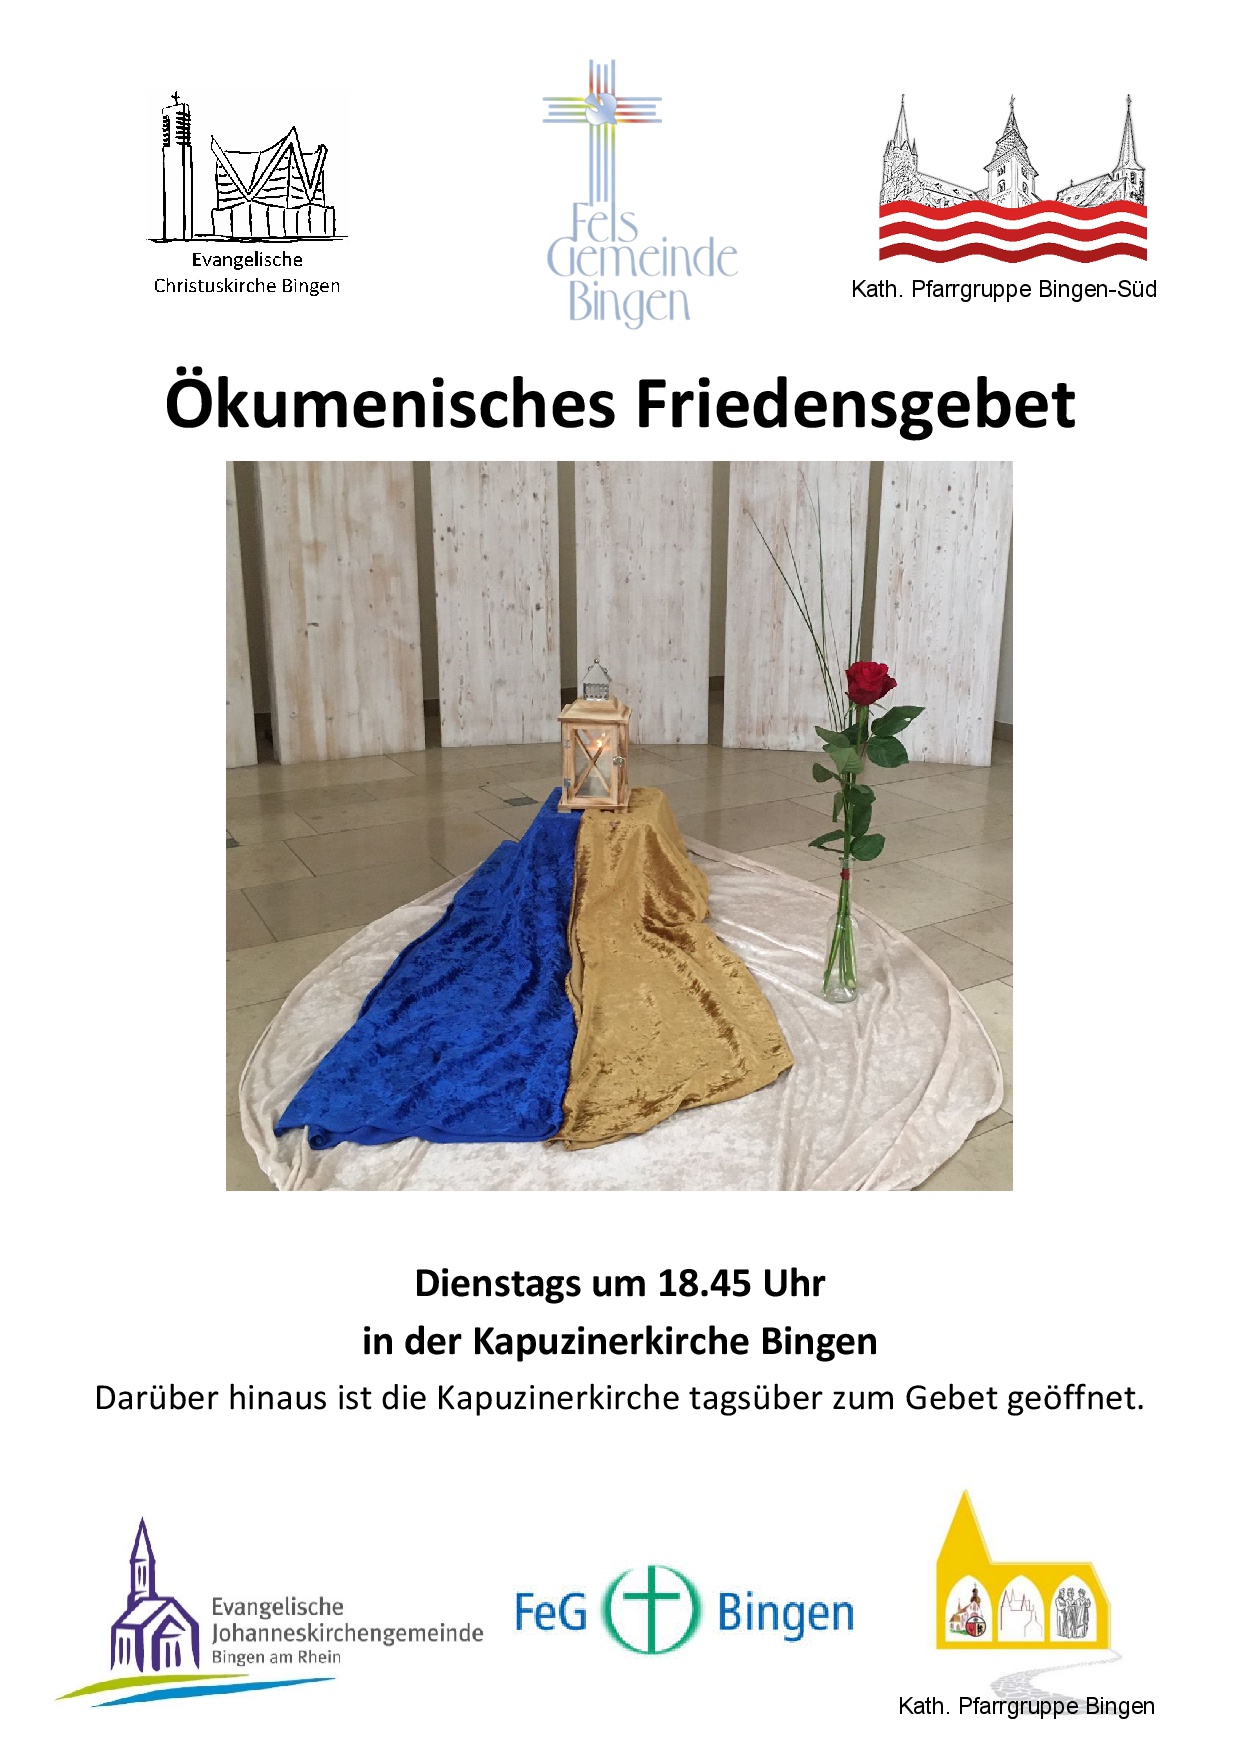 Ökumenisches Friedensgebet Bingen 2022 (c) Kirchengemeinden Bingen